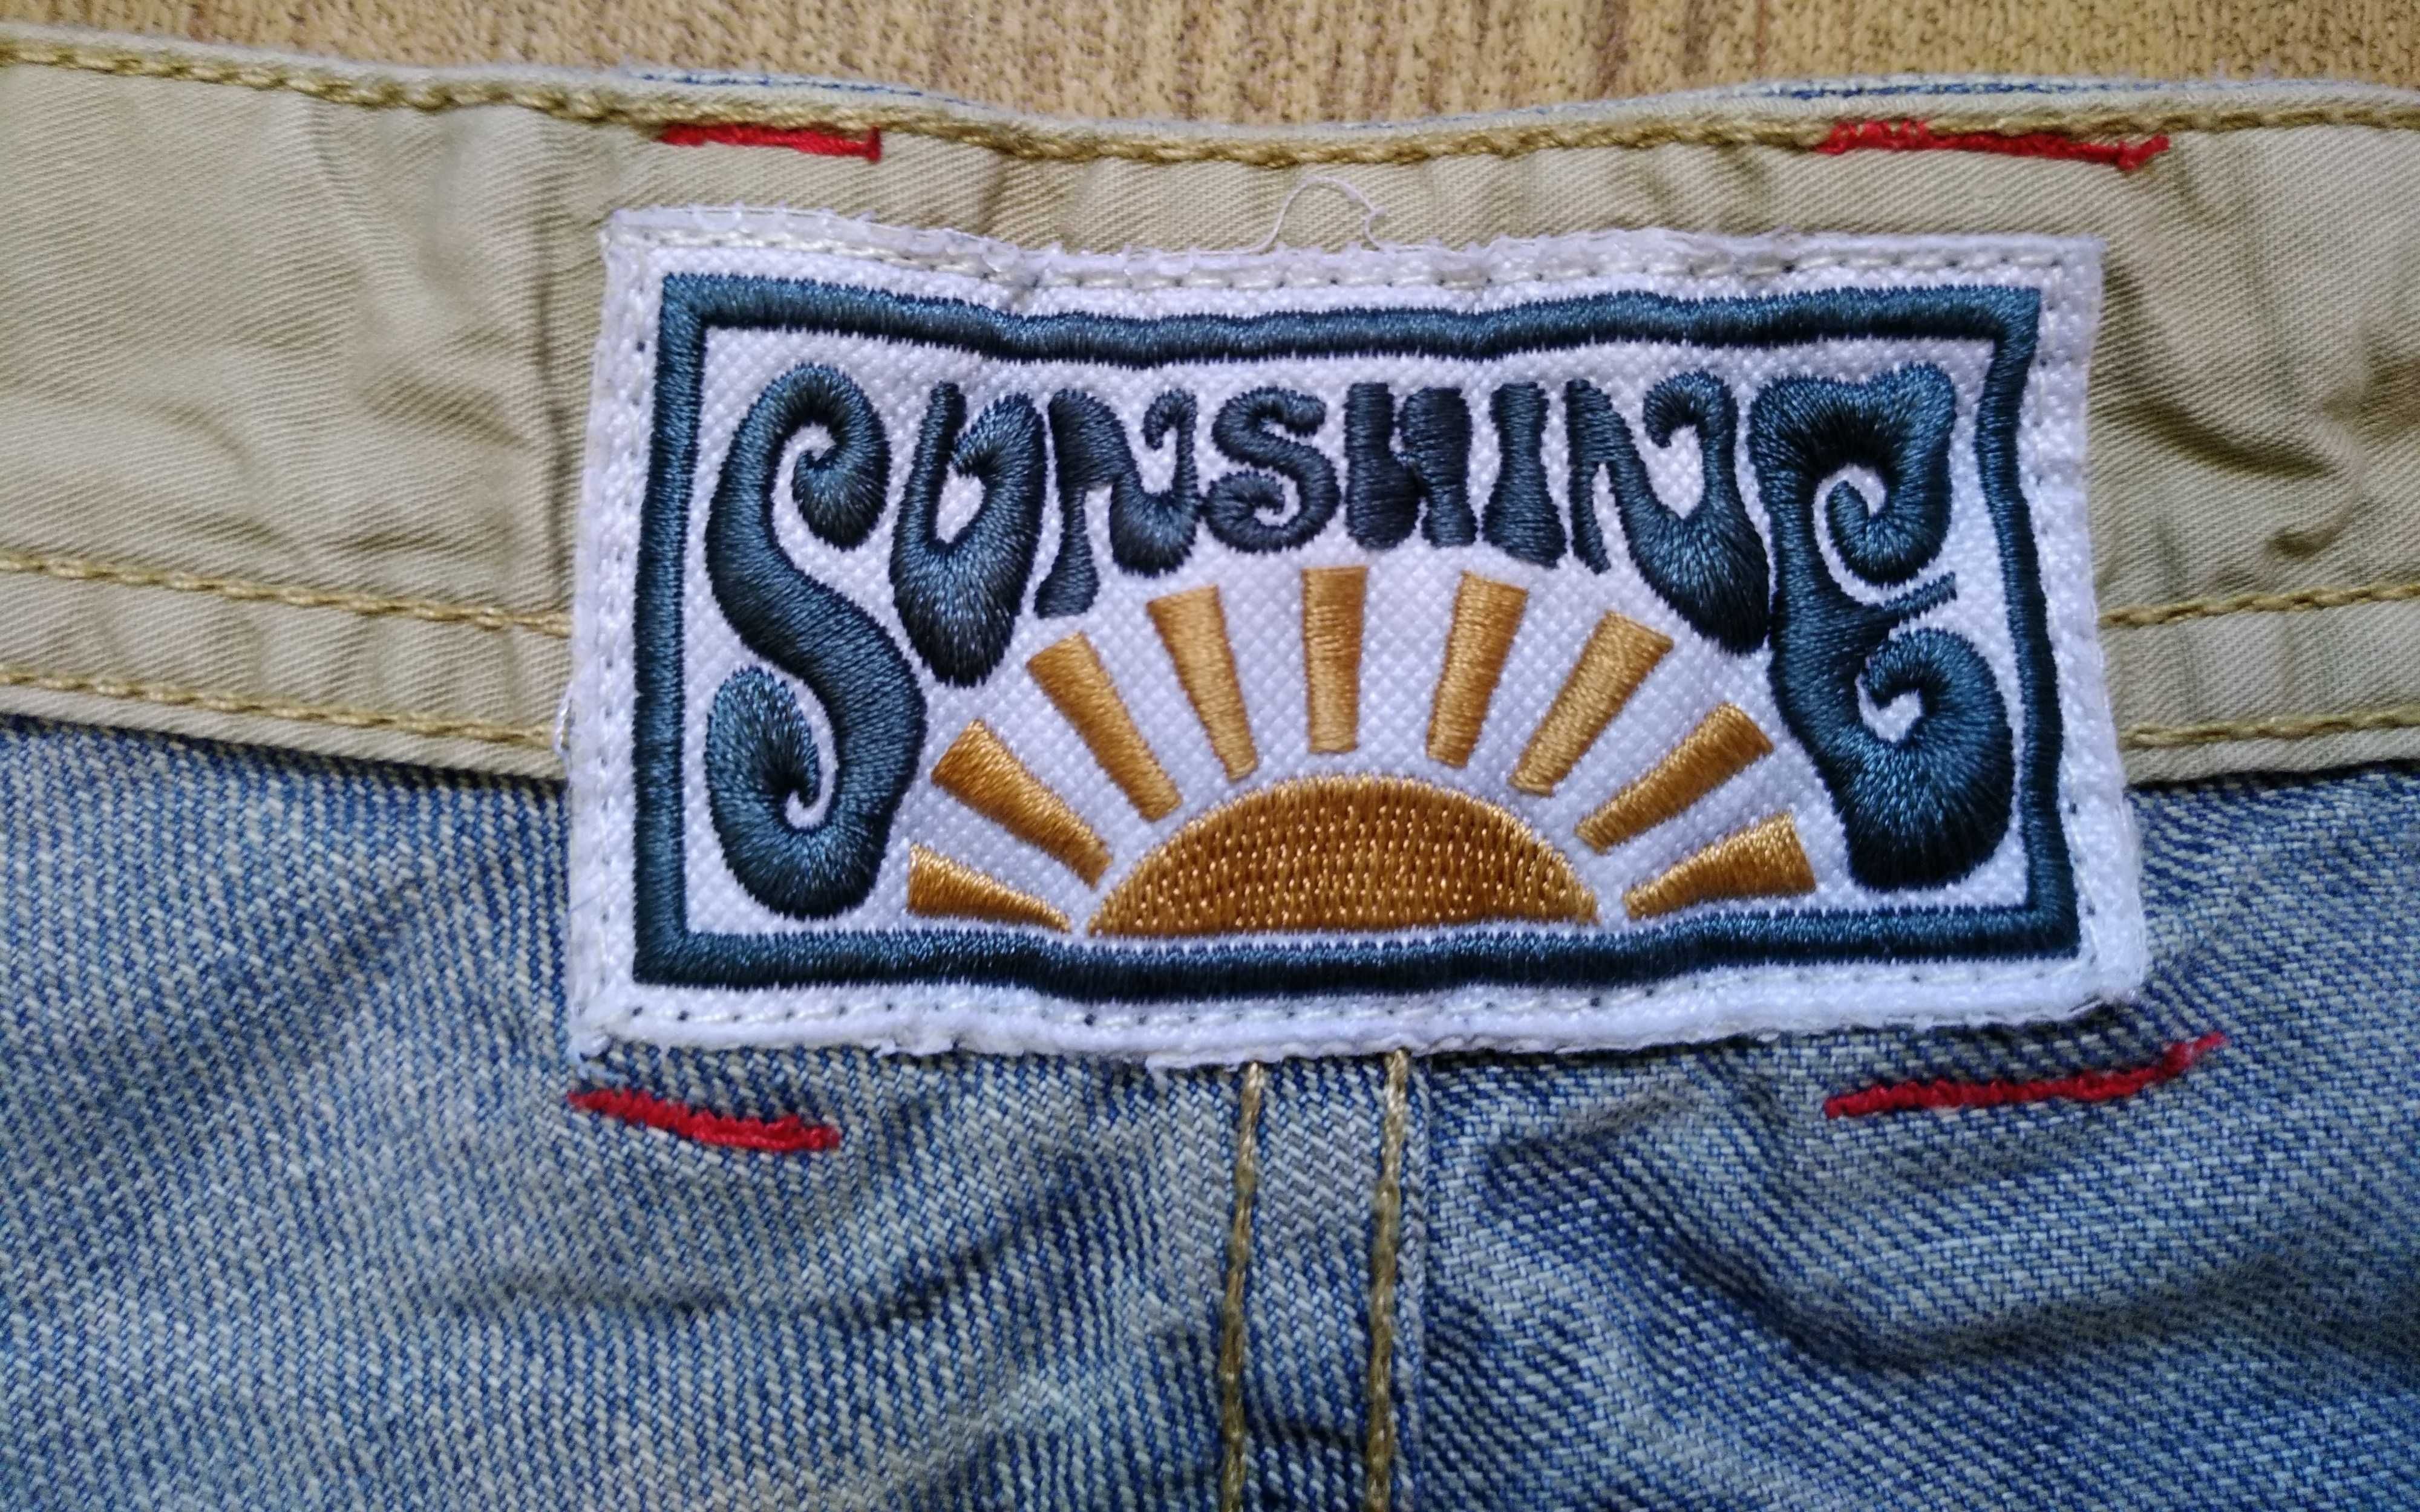 Джинсовые шорты Oviess Jeans Sunshine, размер 34